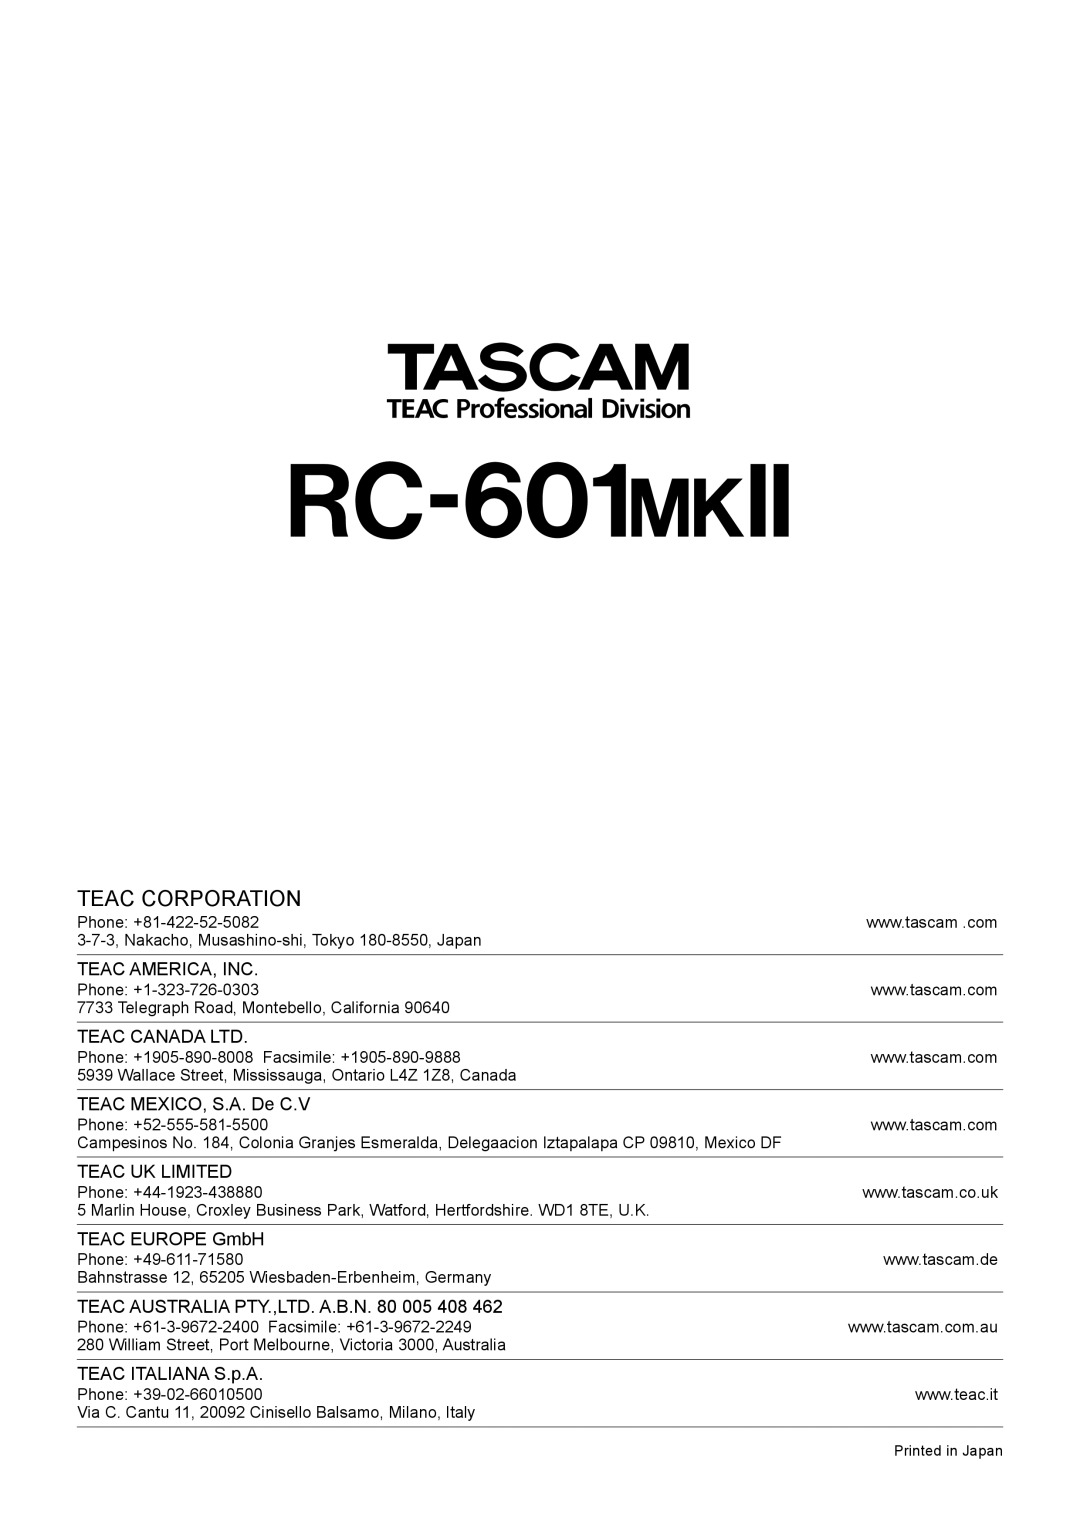 Tascam RC-601mkII Teac America, Inc, TEAC MEXICO, S.A. De C.V, Teac Uk Limited, TEAC EUROPE GmbH, TEAC ITALIANA S.p.A 